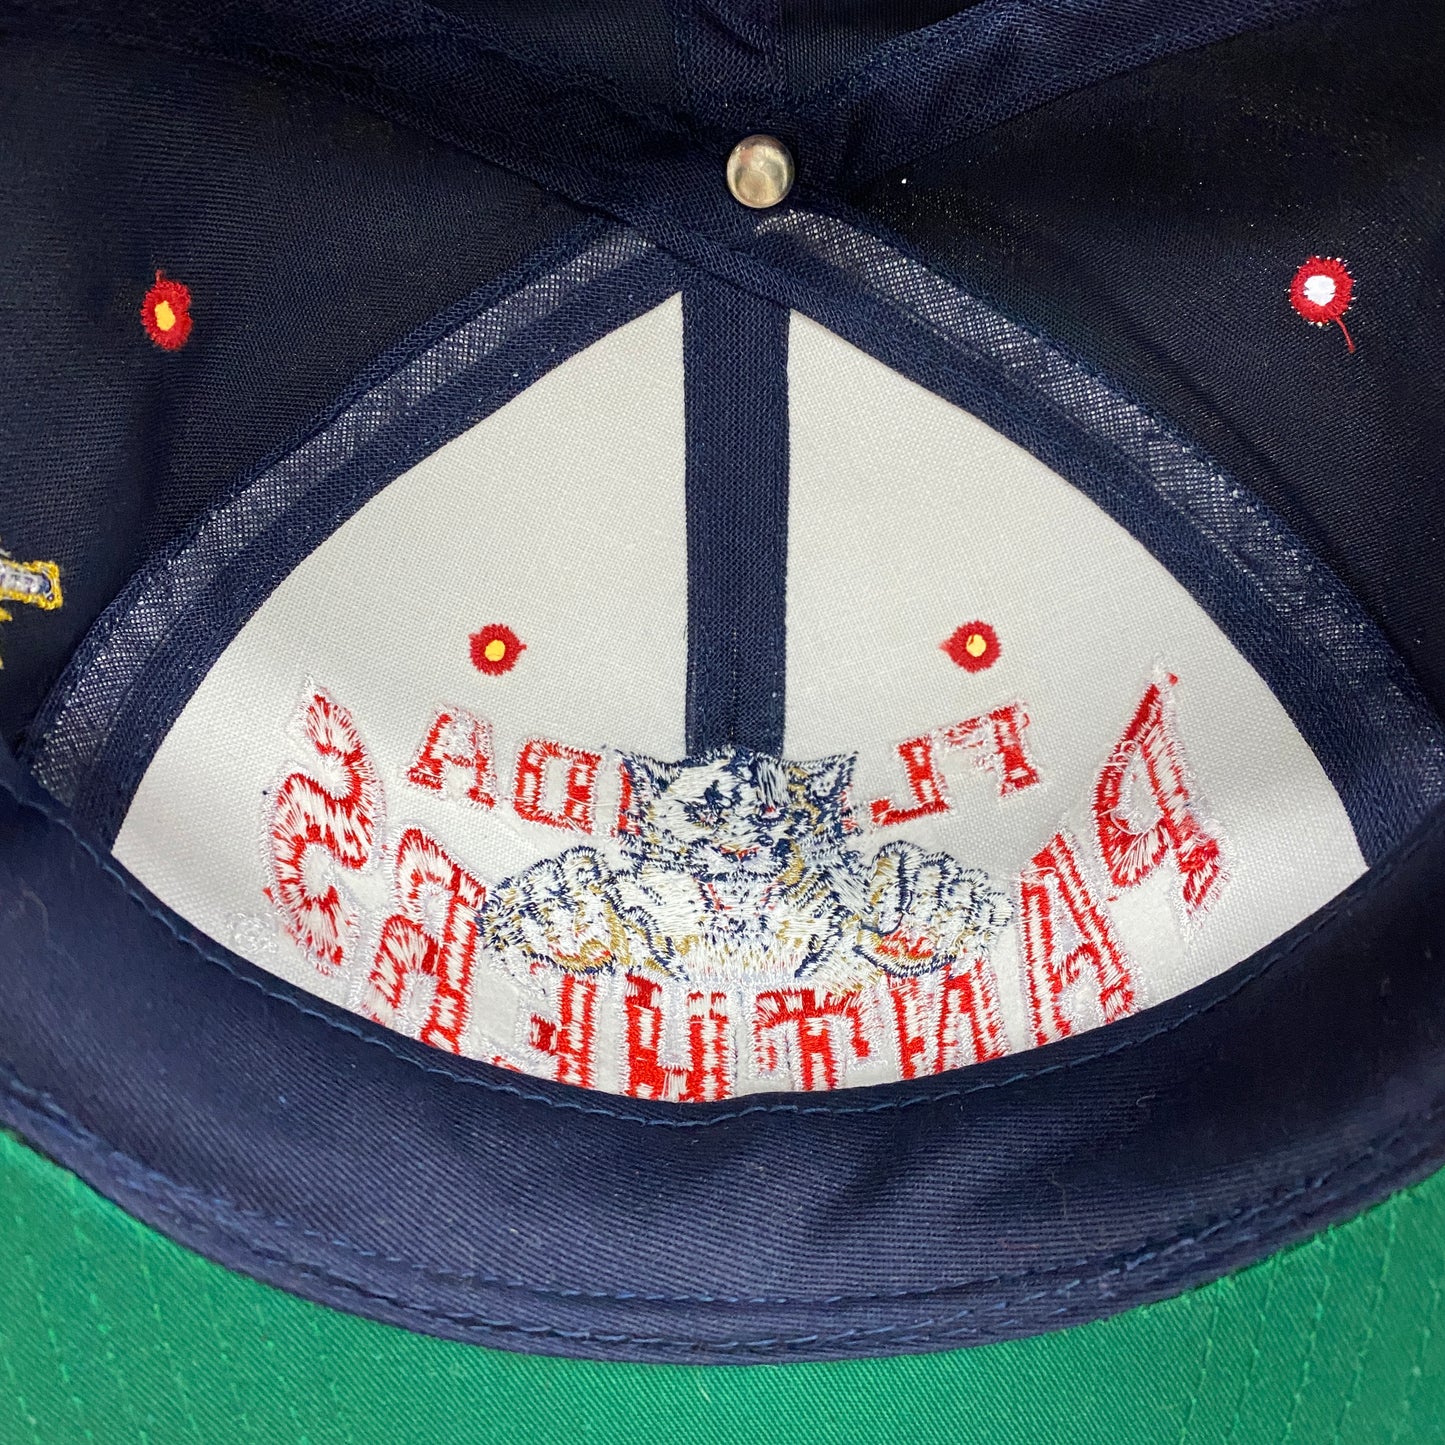 Vintage 1990s Florida Panthers Embroidered Snapback Hat